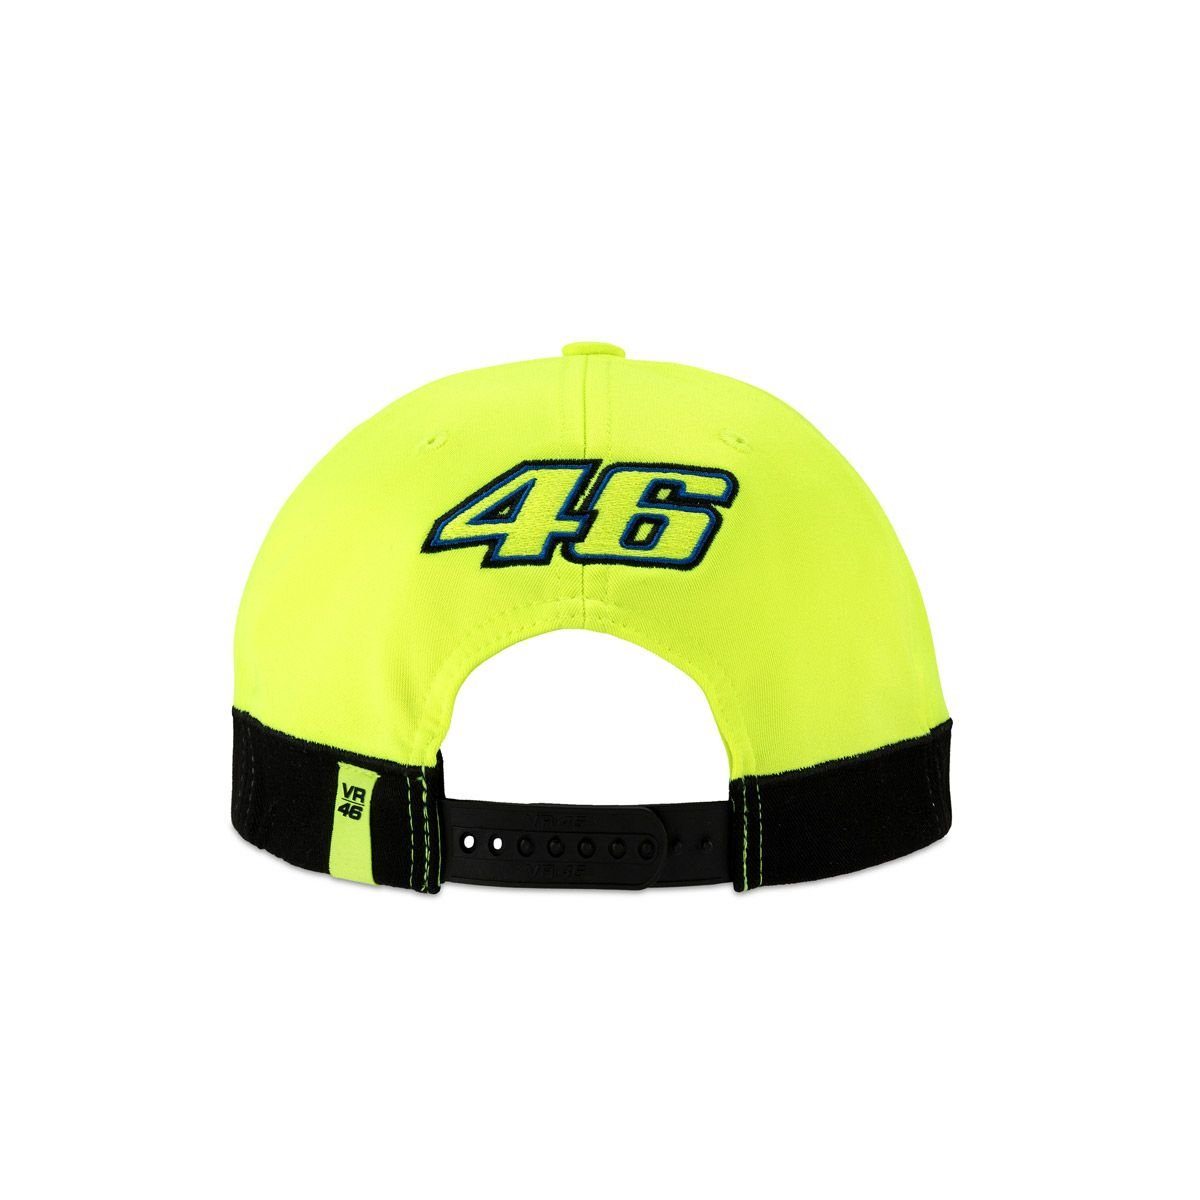 (Schwarz/Neon-Gelb) Valentino Cupolino Größenverstellbar VR46 Baseball Cap Rossi